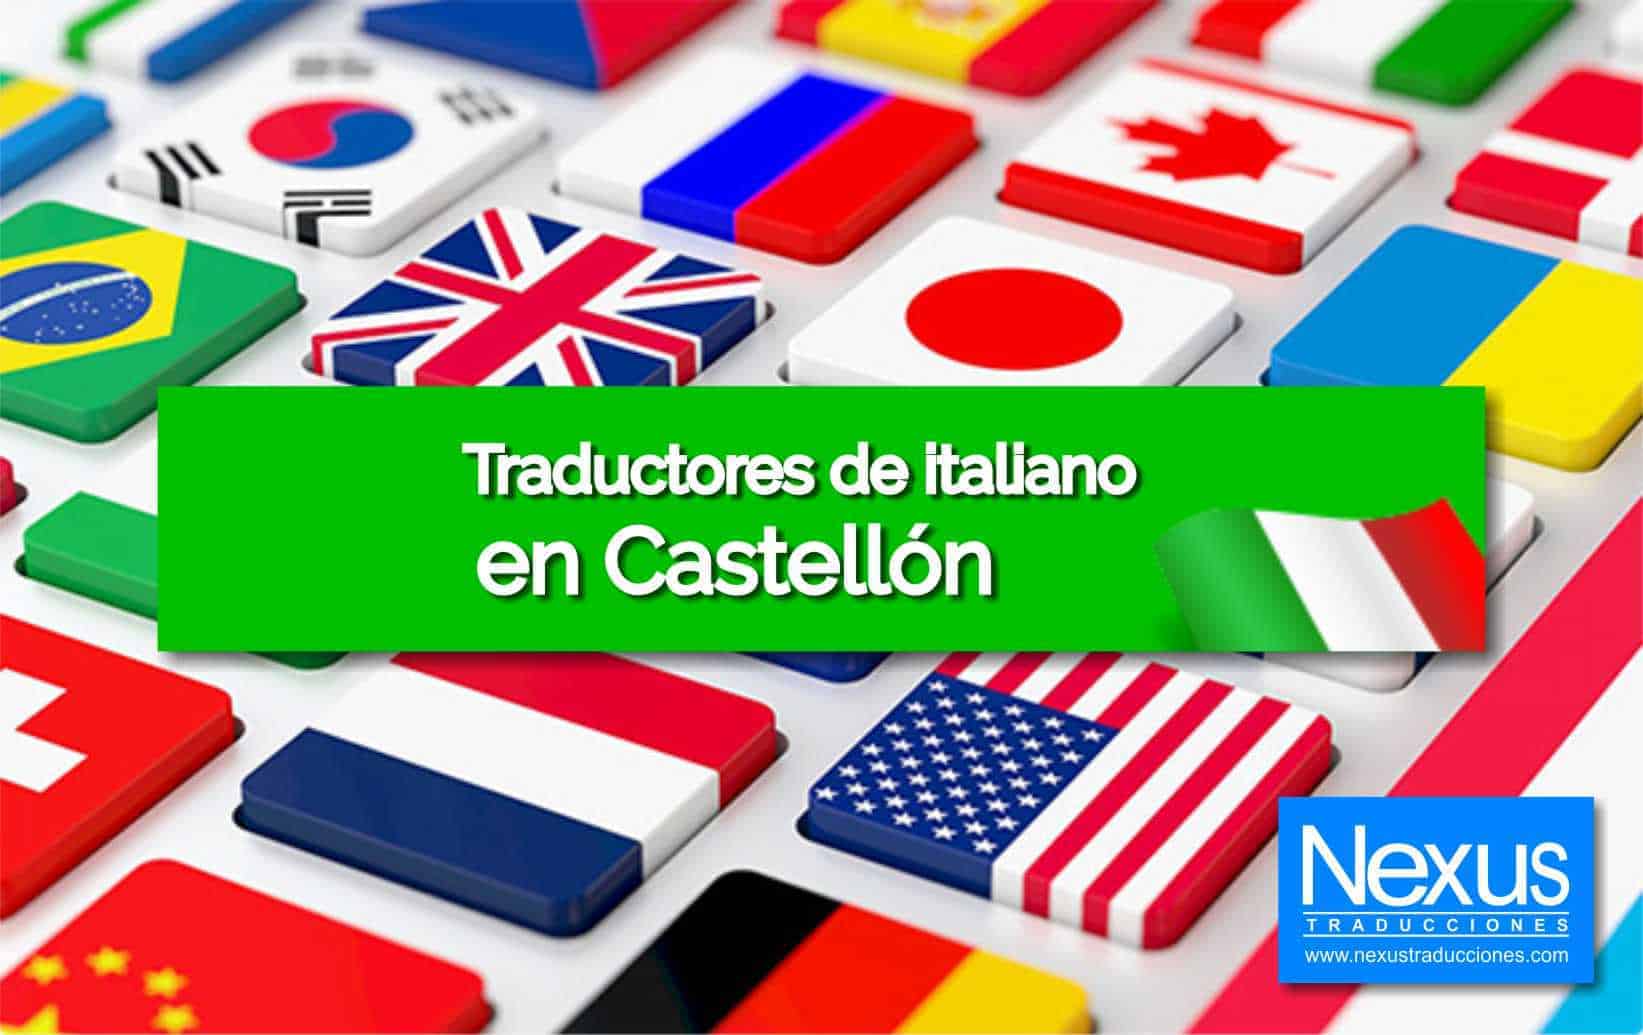 Italian translations in Castellon